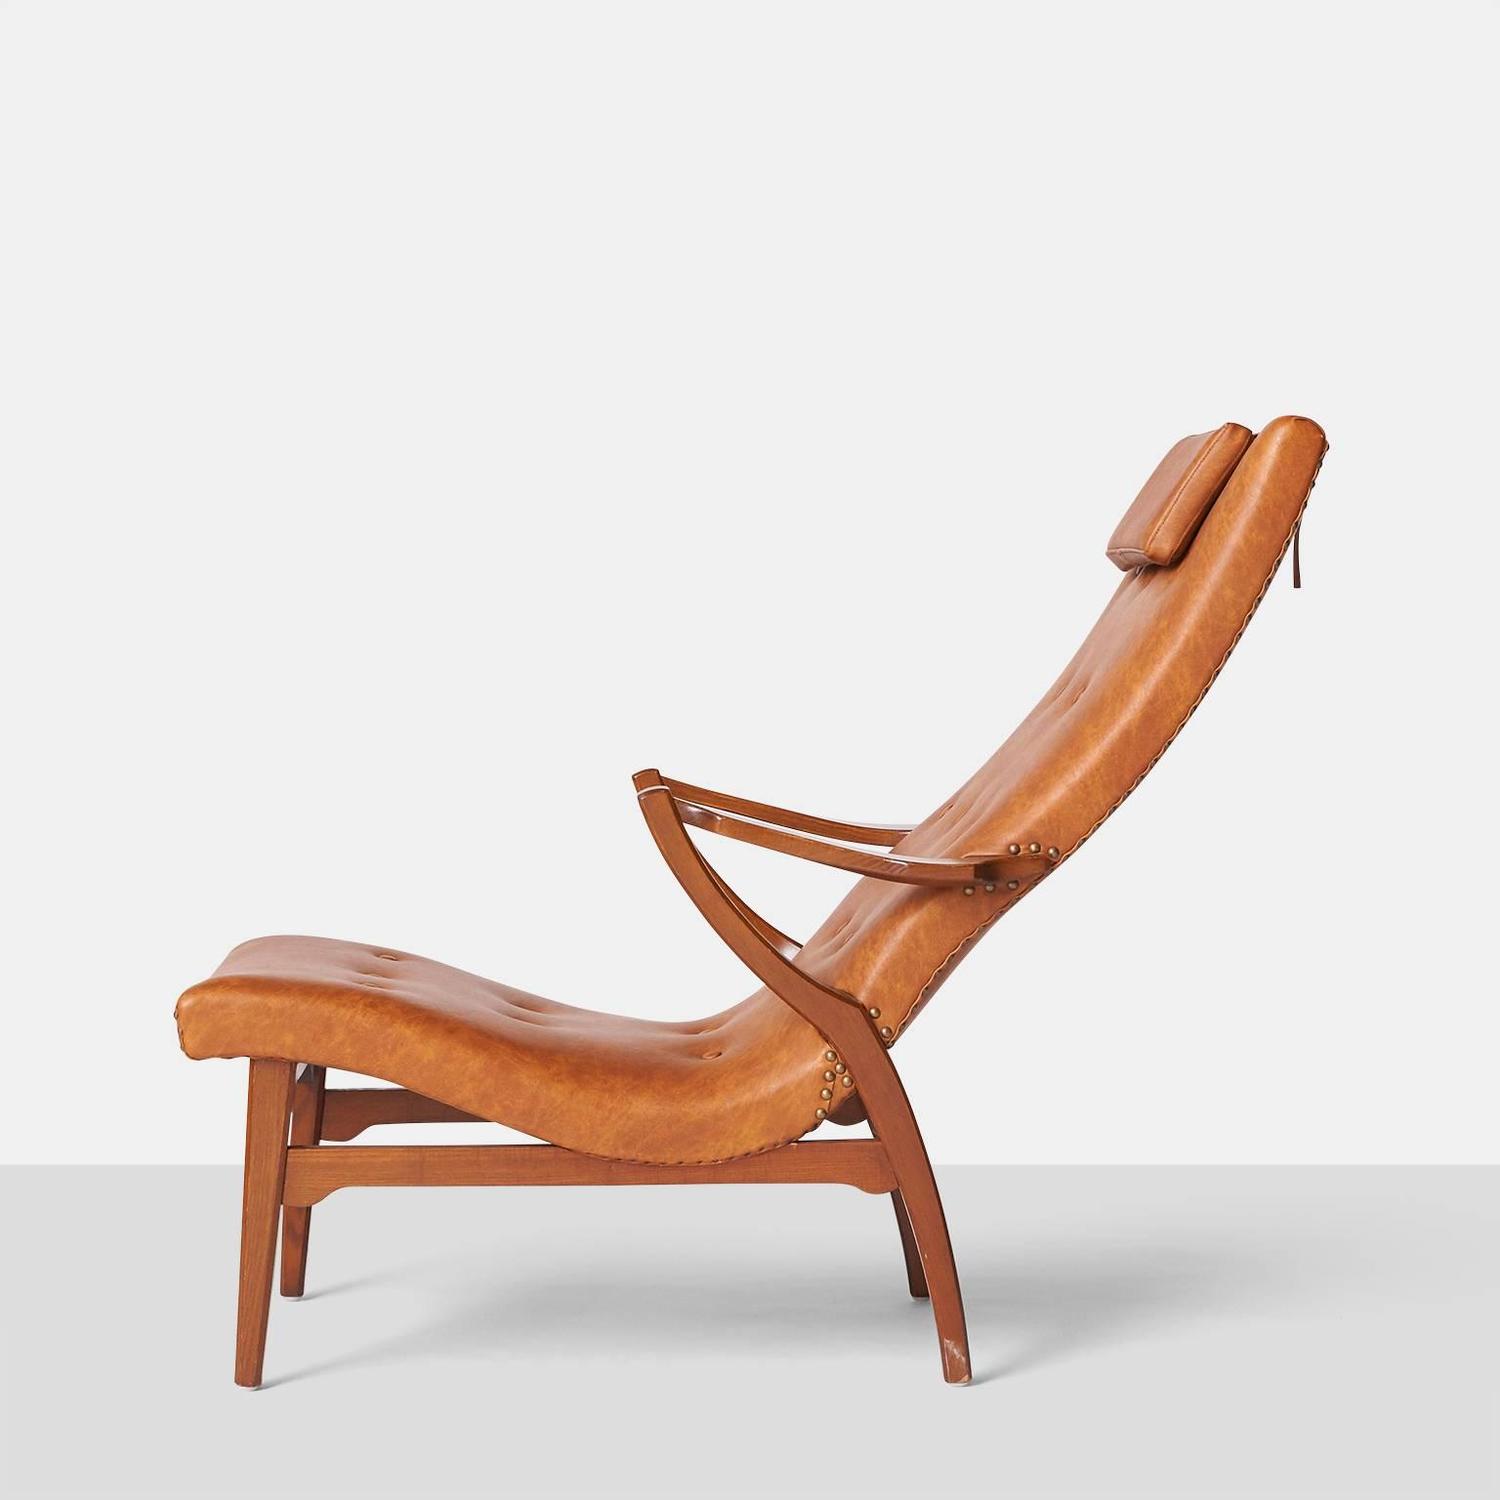 Swedish Lounge Chair And Ottoman For Sale At 1stdibs